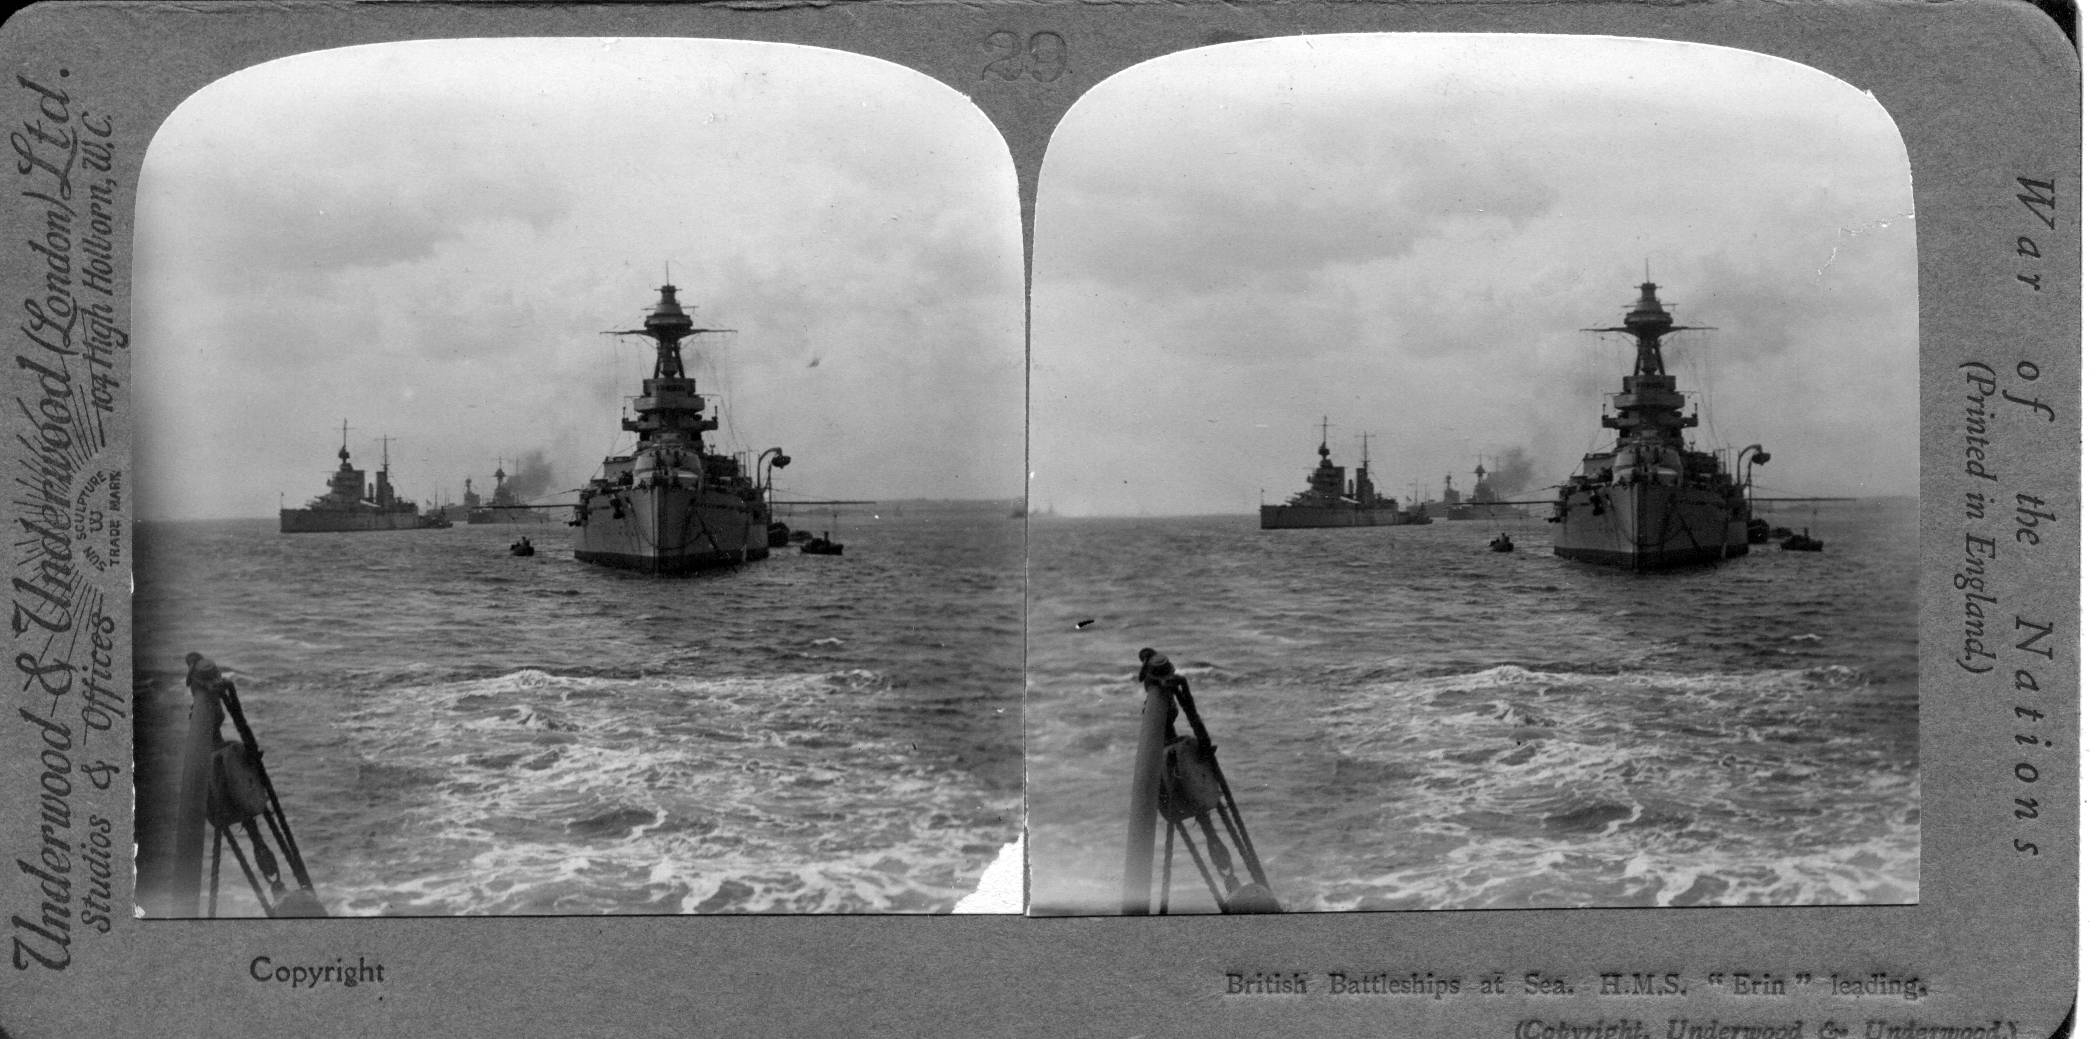 British Battleships at Sea. H.M.S. "Erin" leading